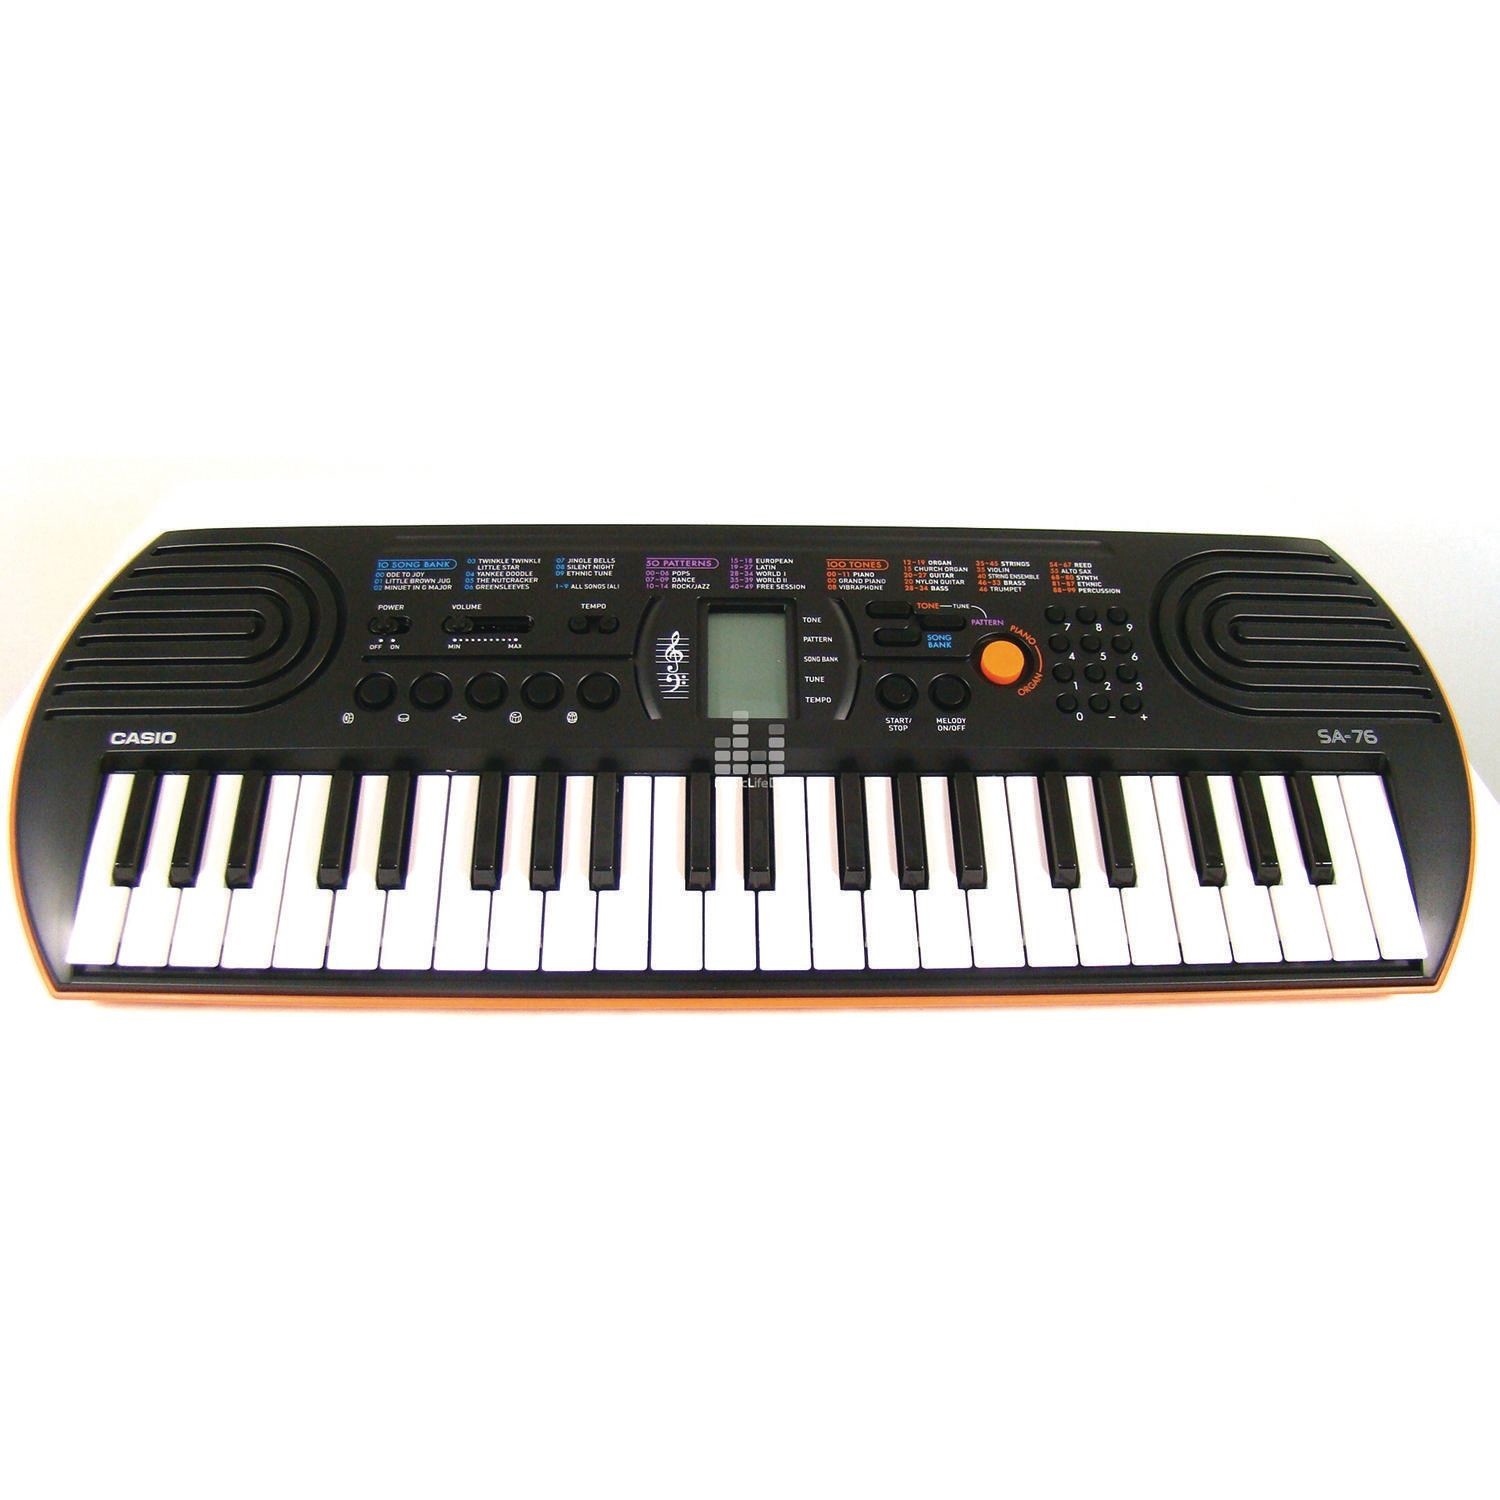 Buy Casio® Musical Keyboard at S&S Worldwide